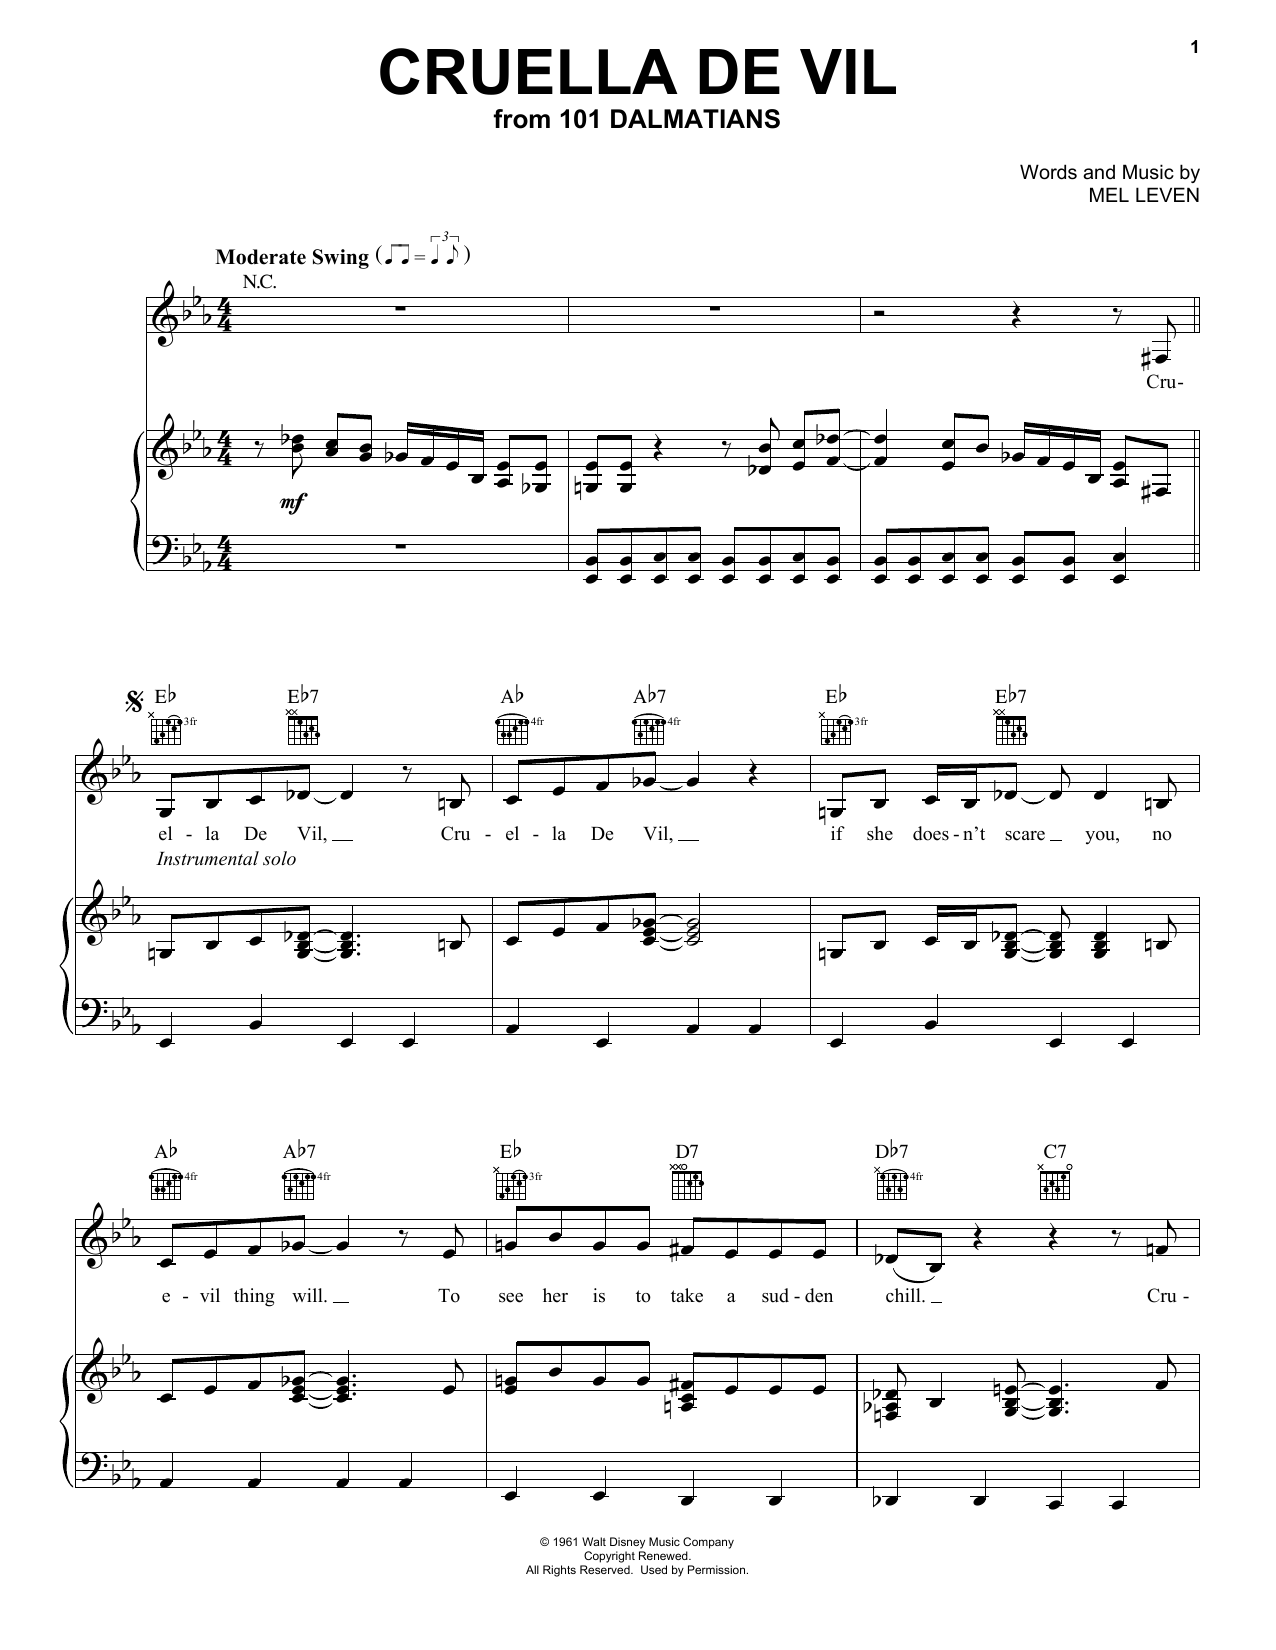 Mel Leven Cruella De Vil Sheet Music Notes & Chords for Piano, Vocal & Guitar (Right-Hand Melody) - Download or Print PDF